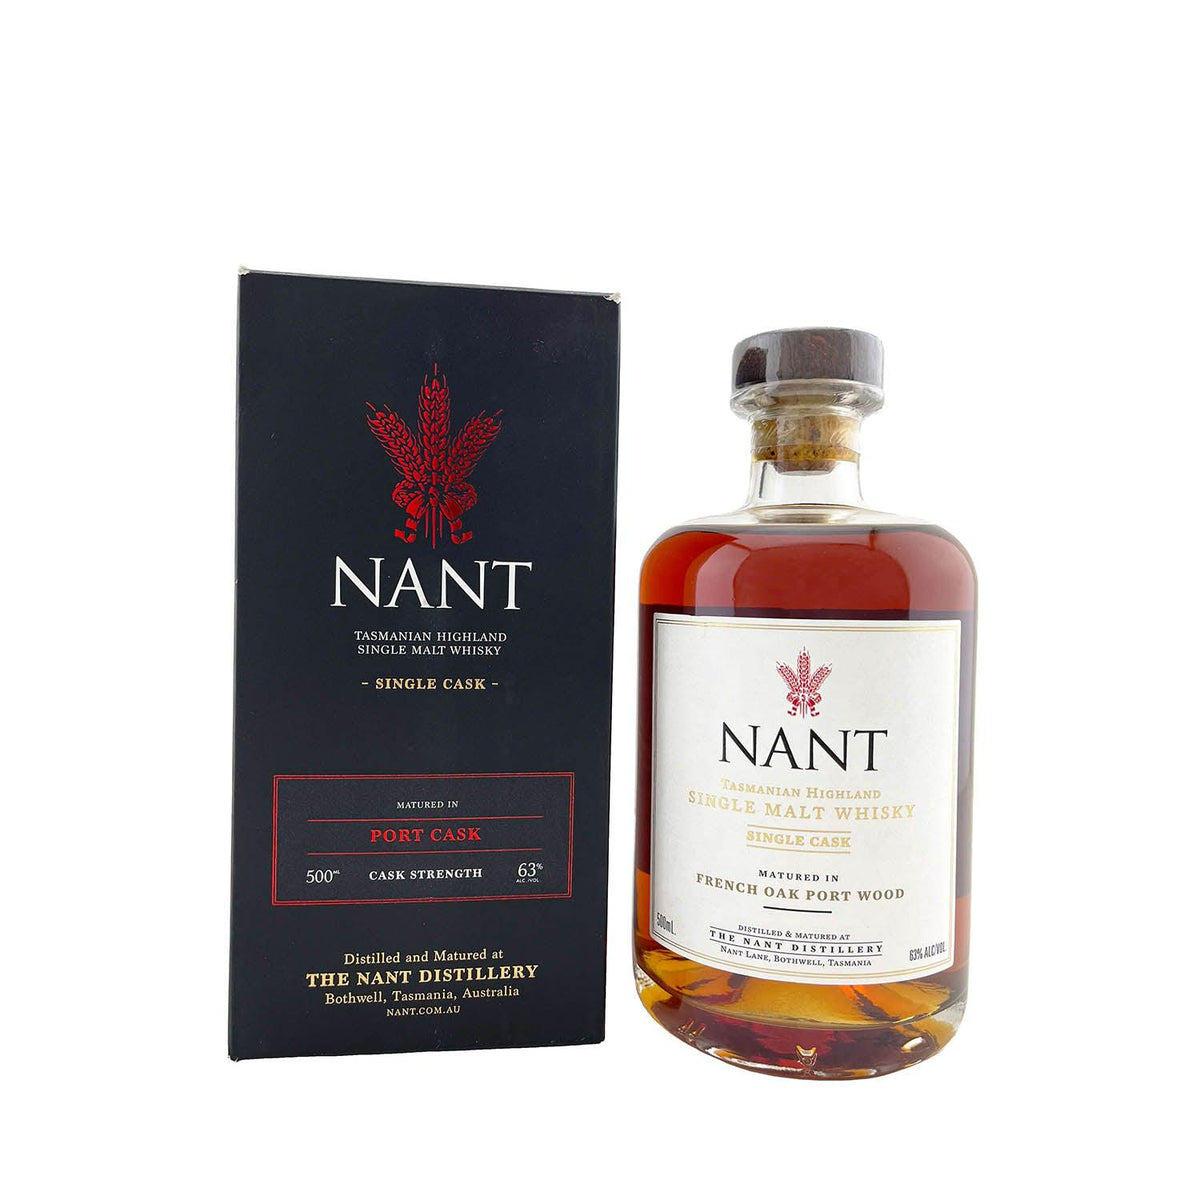 Nant Port Cask Strength (2018) Tasmanian Highland Single Malt Whisky 500ml